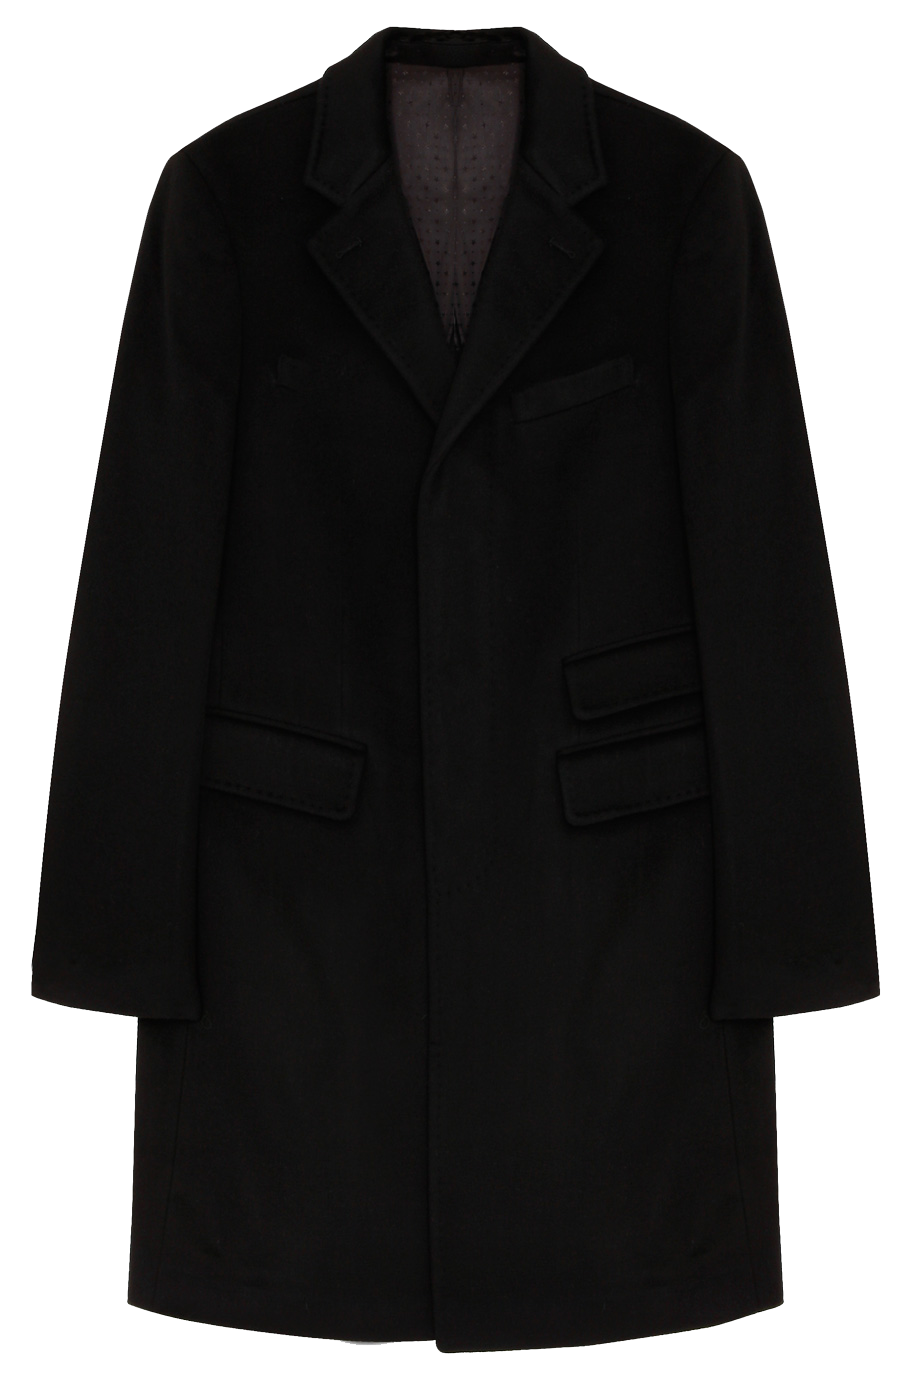 Paul-Joe black Wool And Cashmere Overcoat